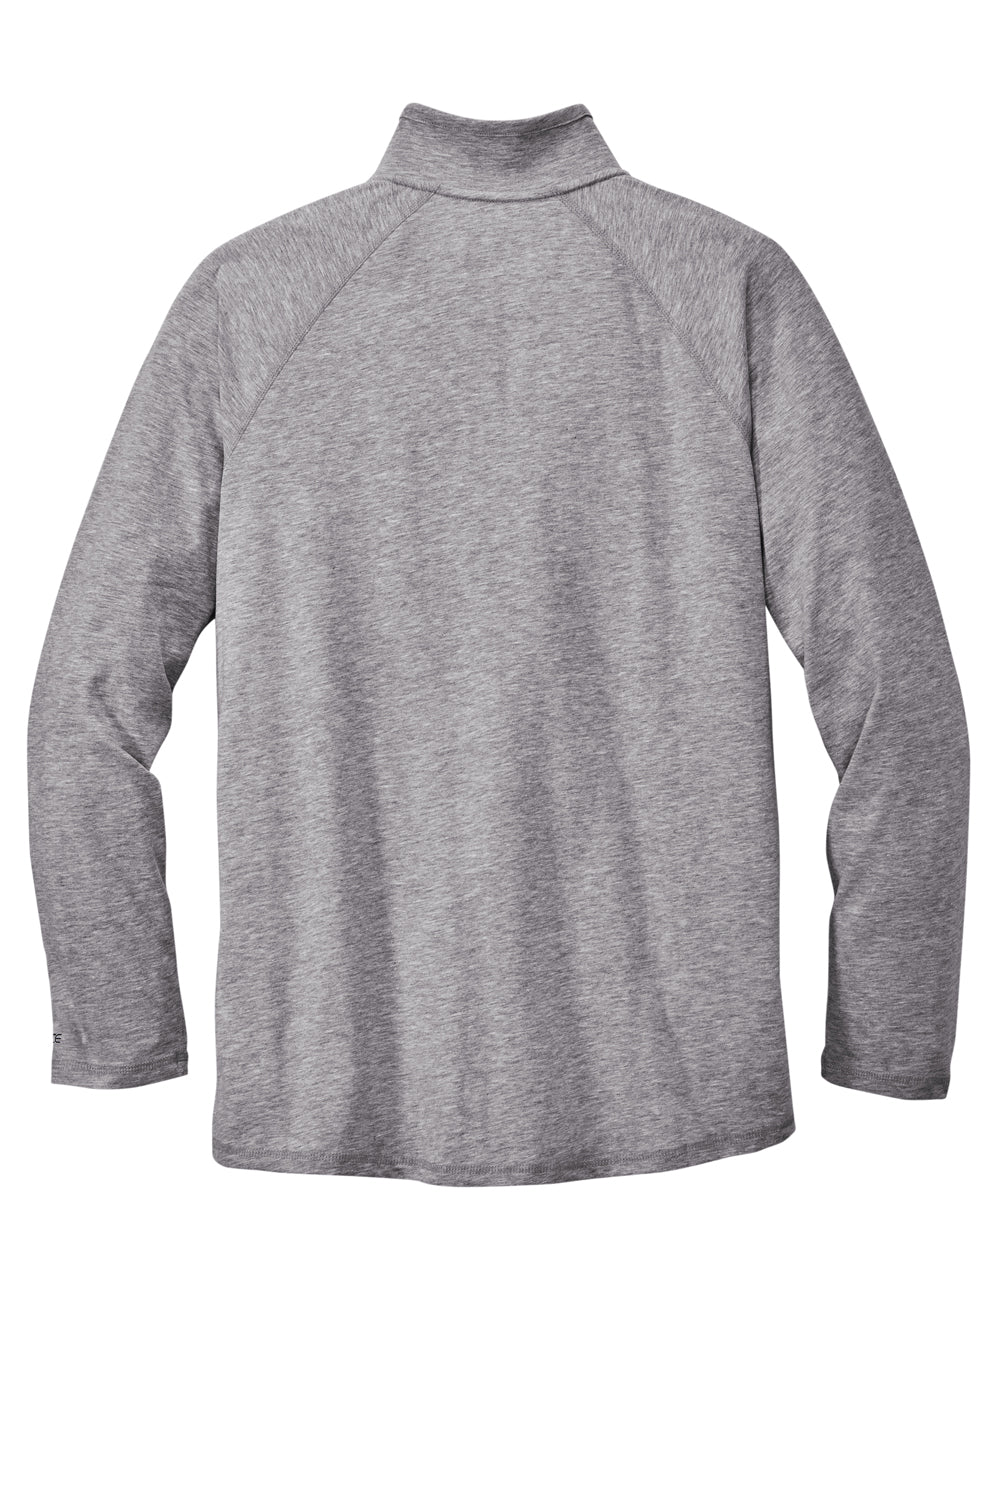 Carhartt CT104255 Mens Force Moisture Wicking 1/4 Zip Long Sleeve T-Shirt w/ Pocket Heather Grey Flat Back